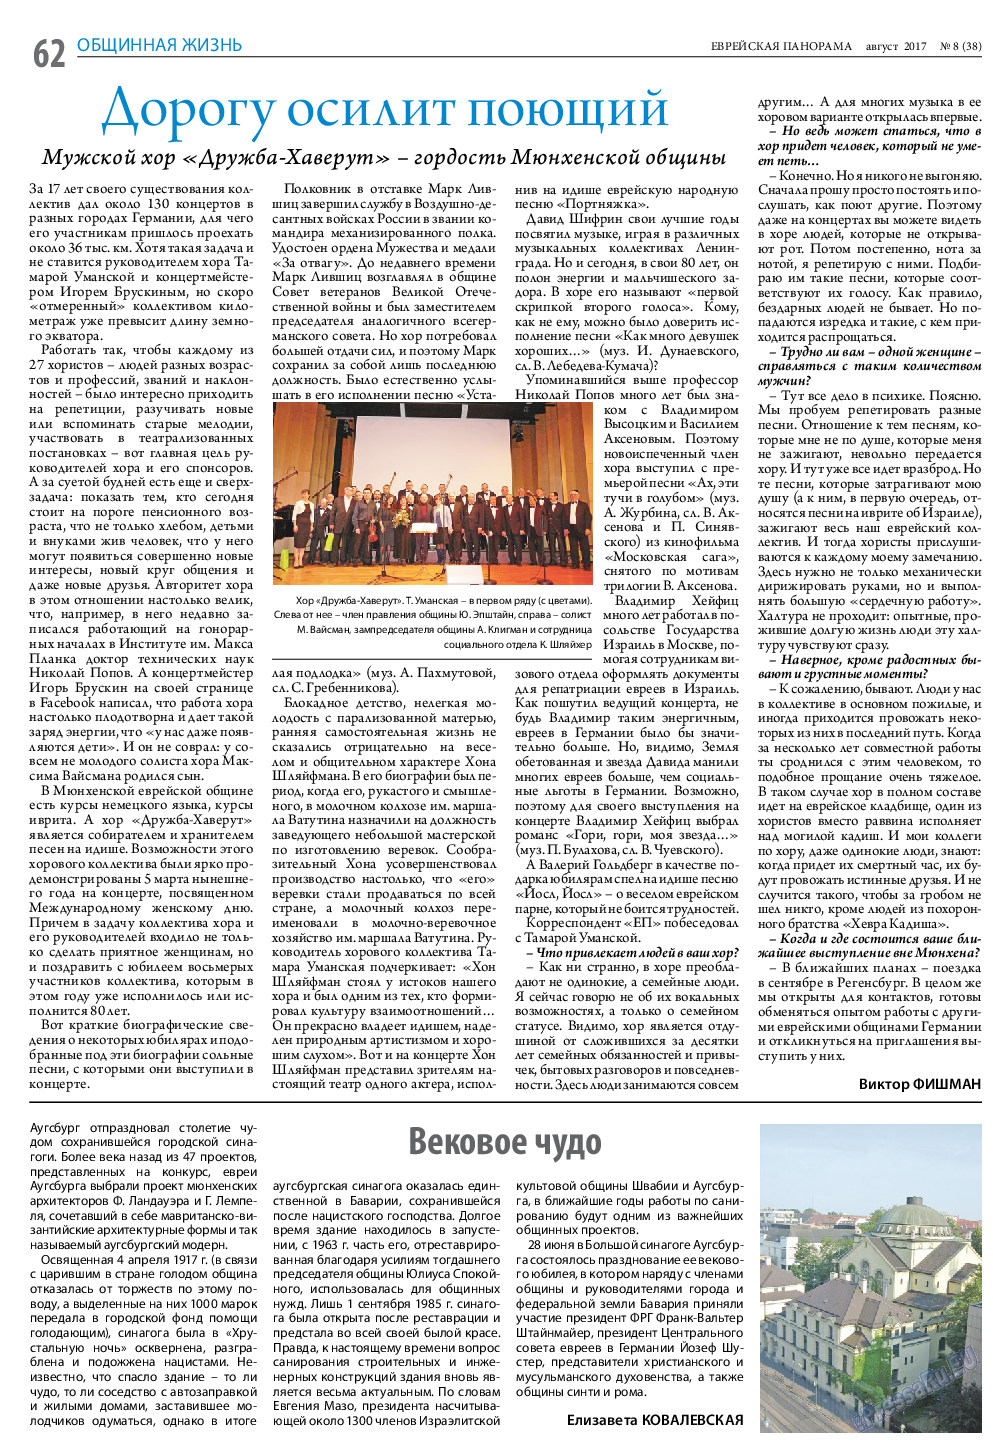 Еврейская панорама, газета. 2017 №8 стр.62